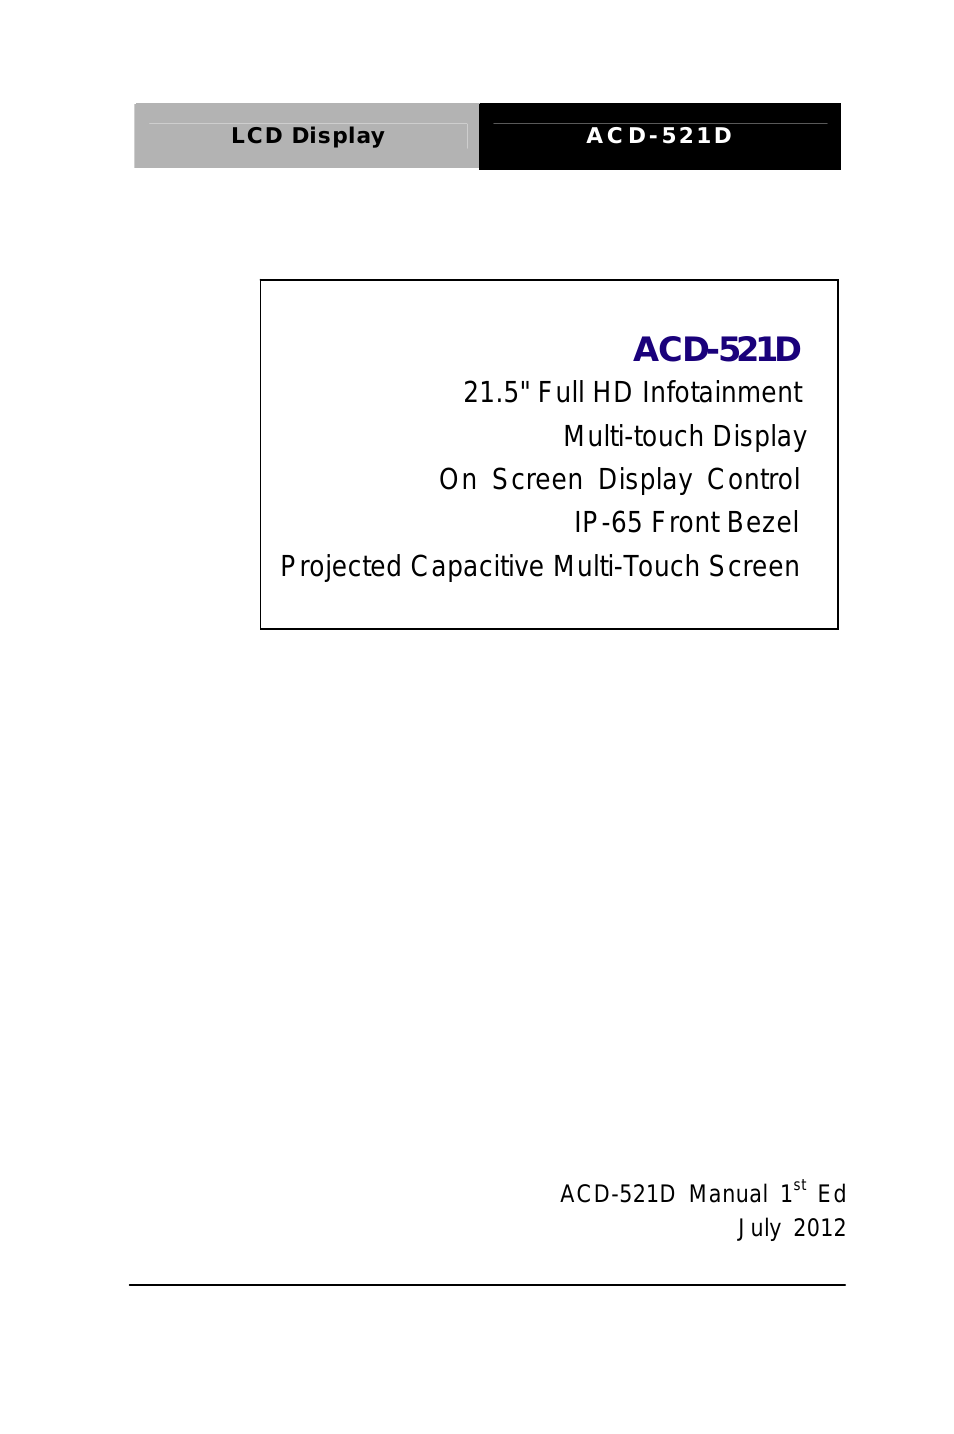 ACD-521D